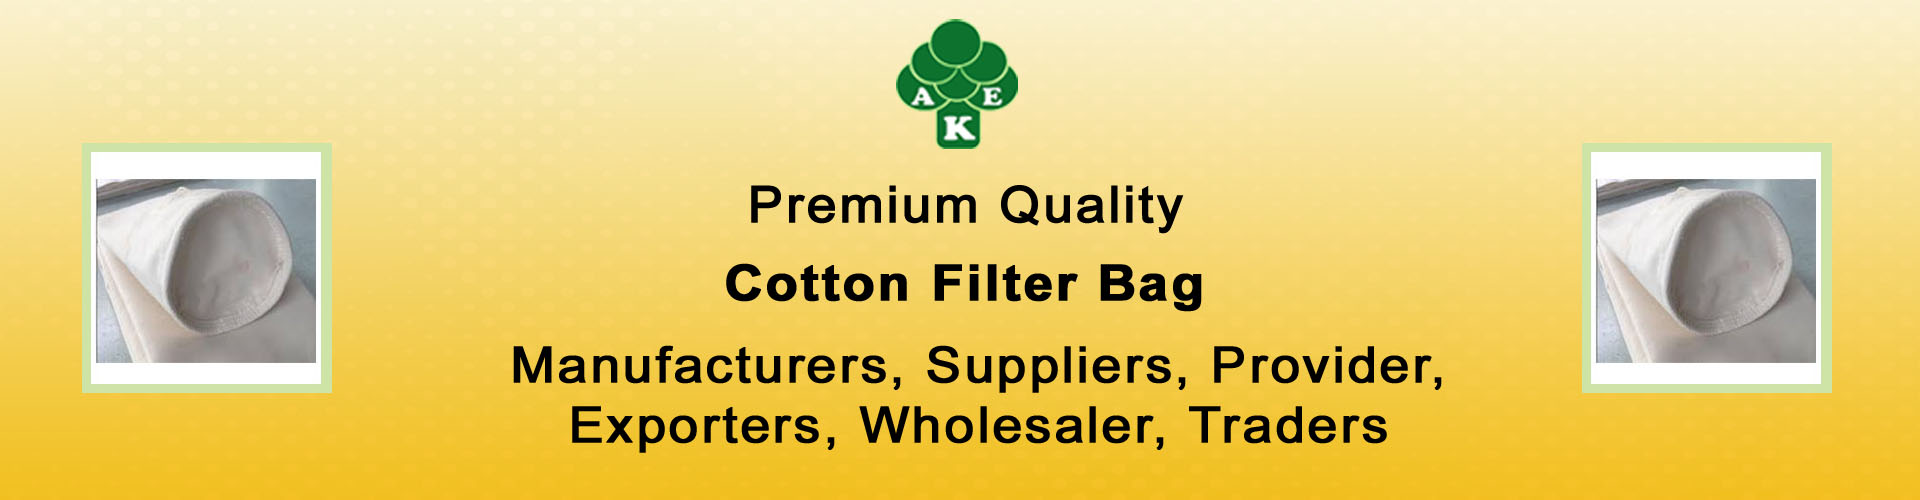 Cotton Filter Bag